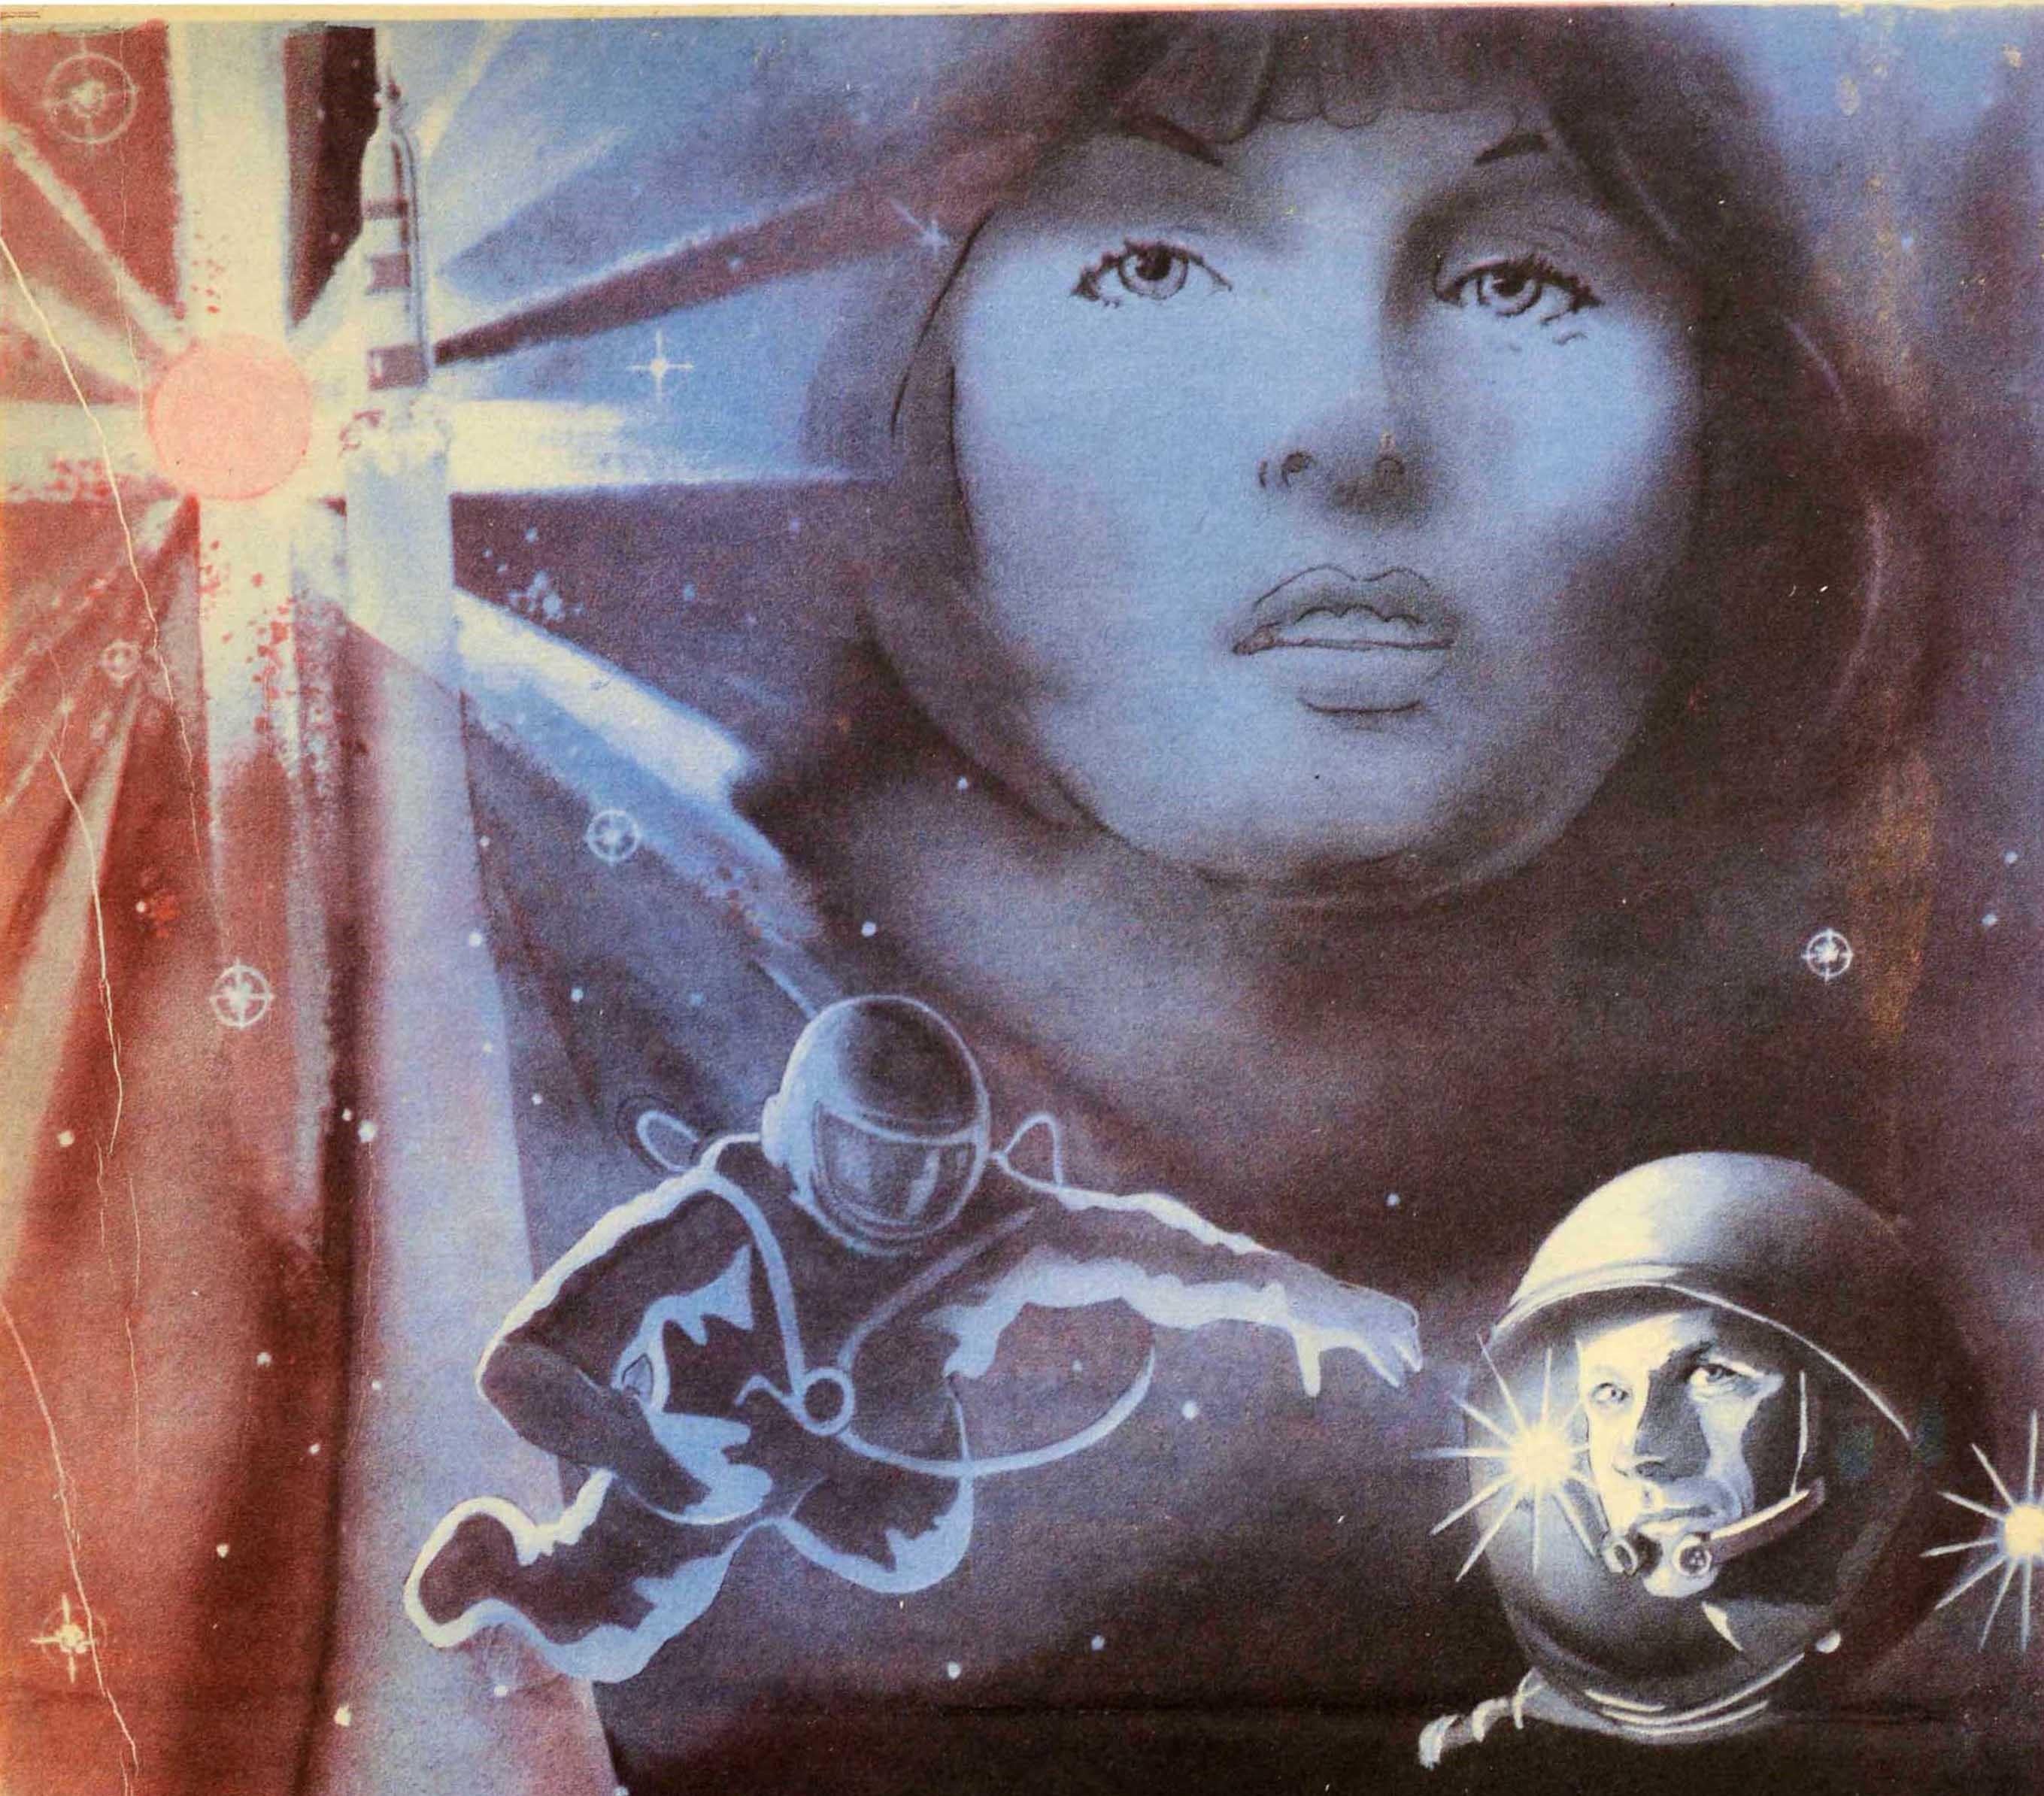 Original Vintage Film Poster Return From Orbit USSR SciFi Space Travel Movie Art - Print by Lobanova